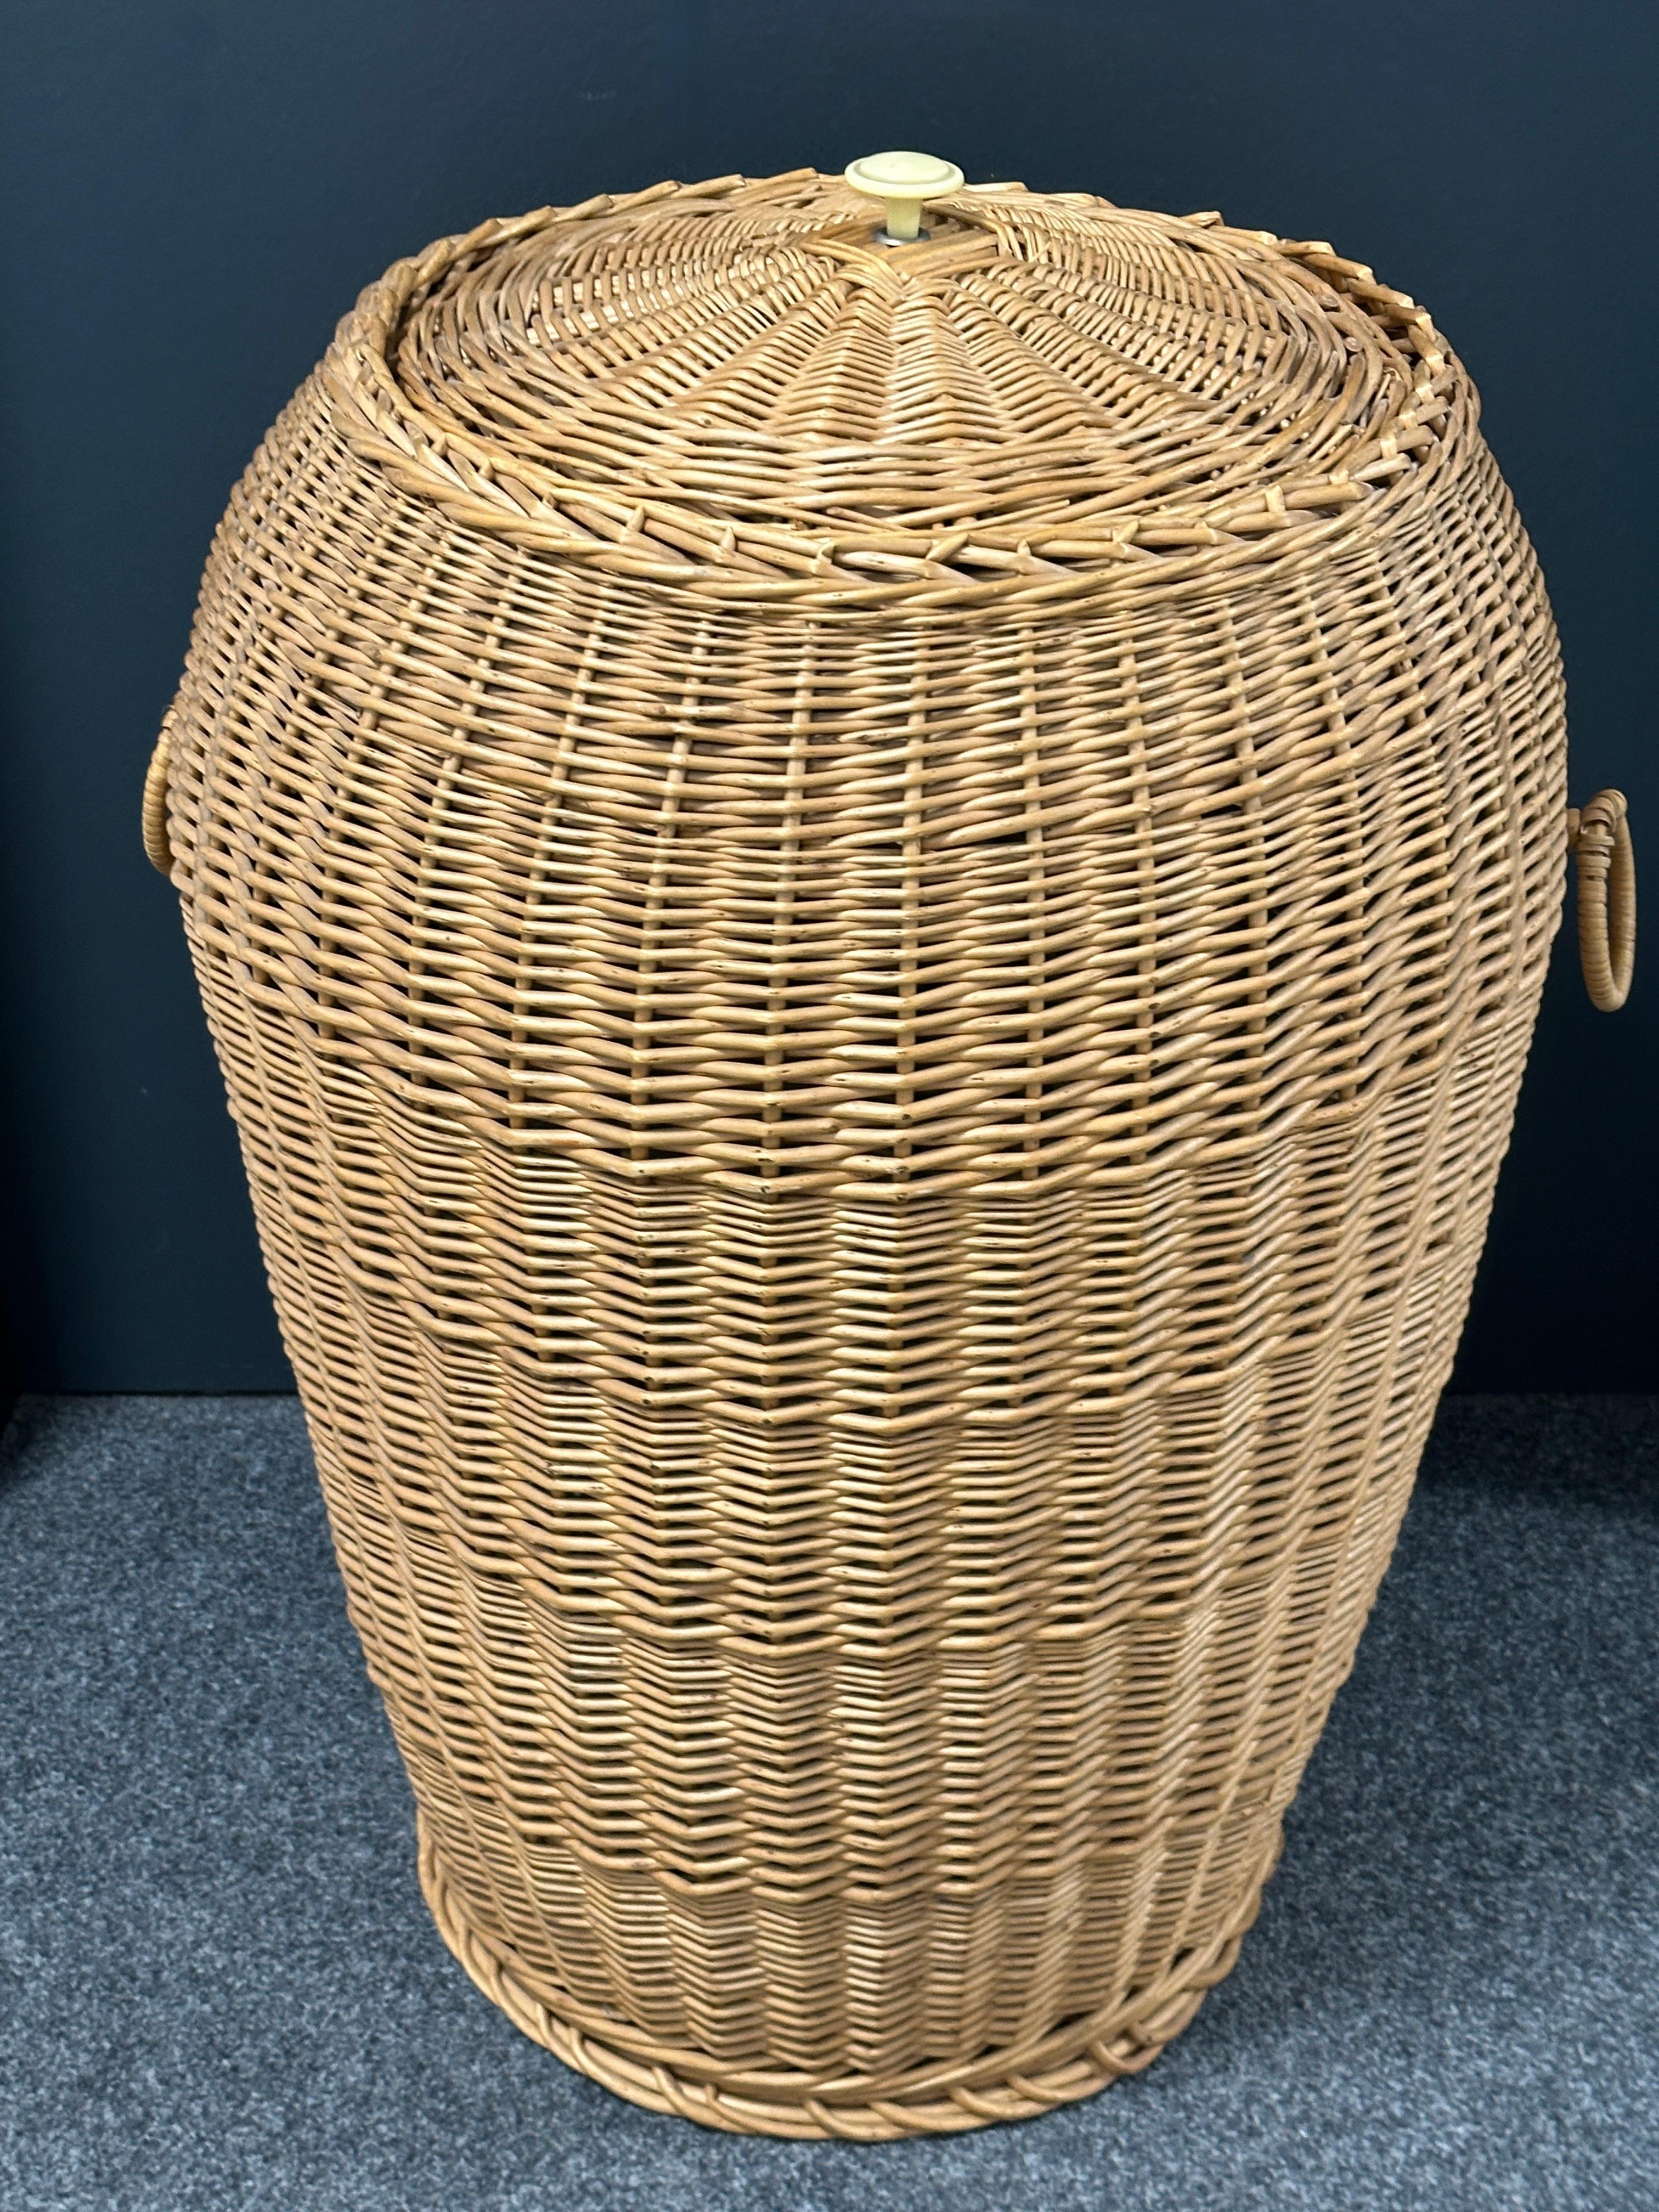 Monumental Vintage Midcentury Wicker Laundry Basket Hamper, 1970s, German For Sale 7